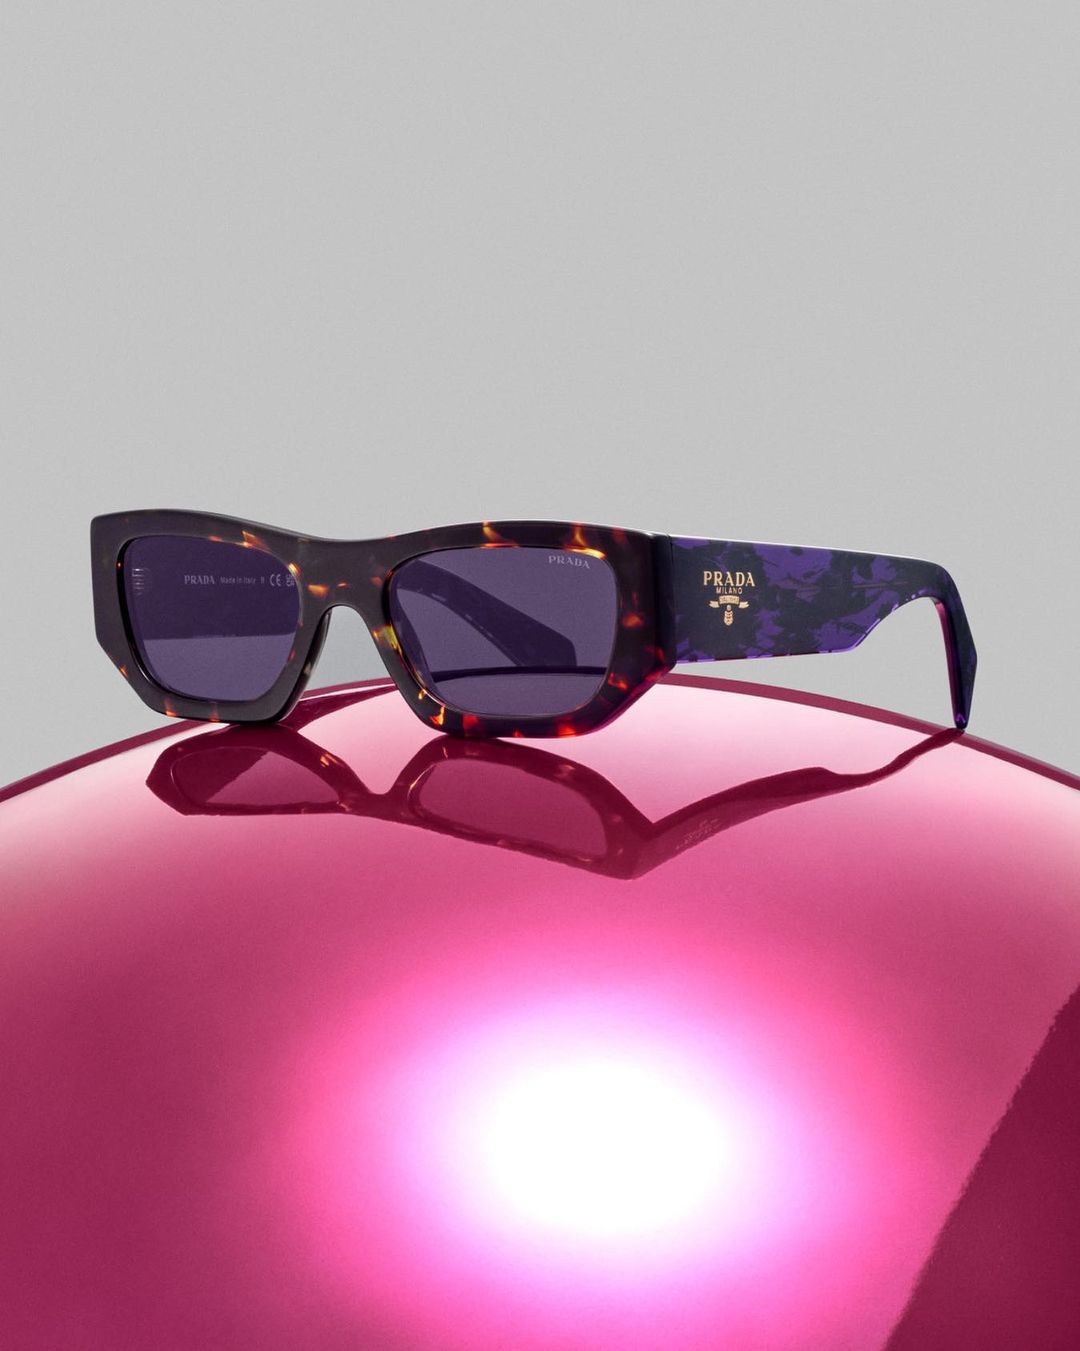 Prada sunglasses from Sunglass Hut